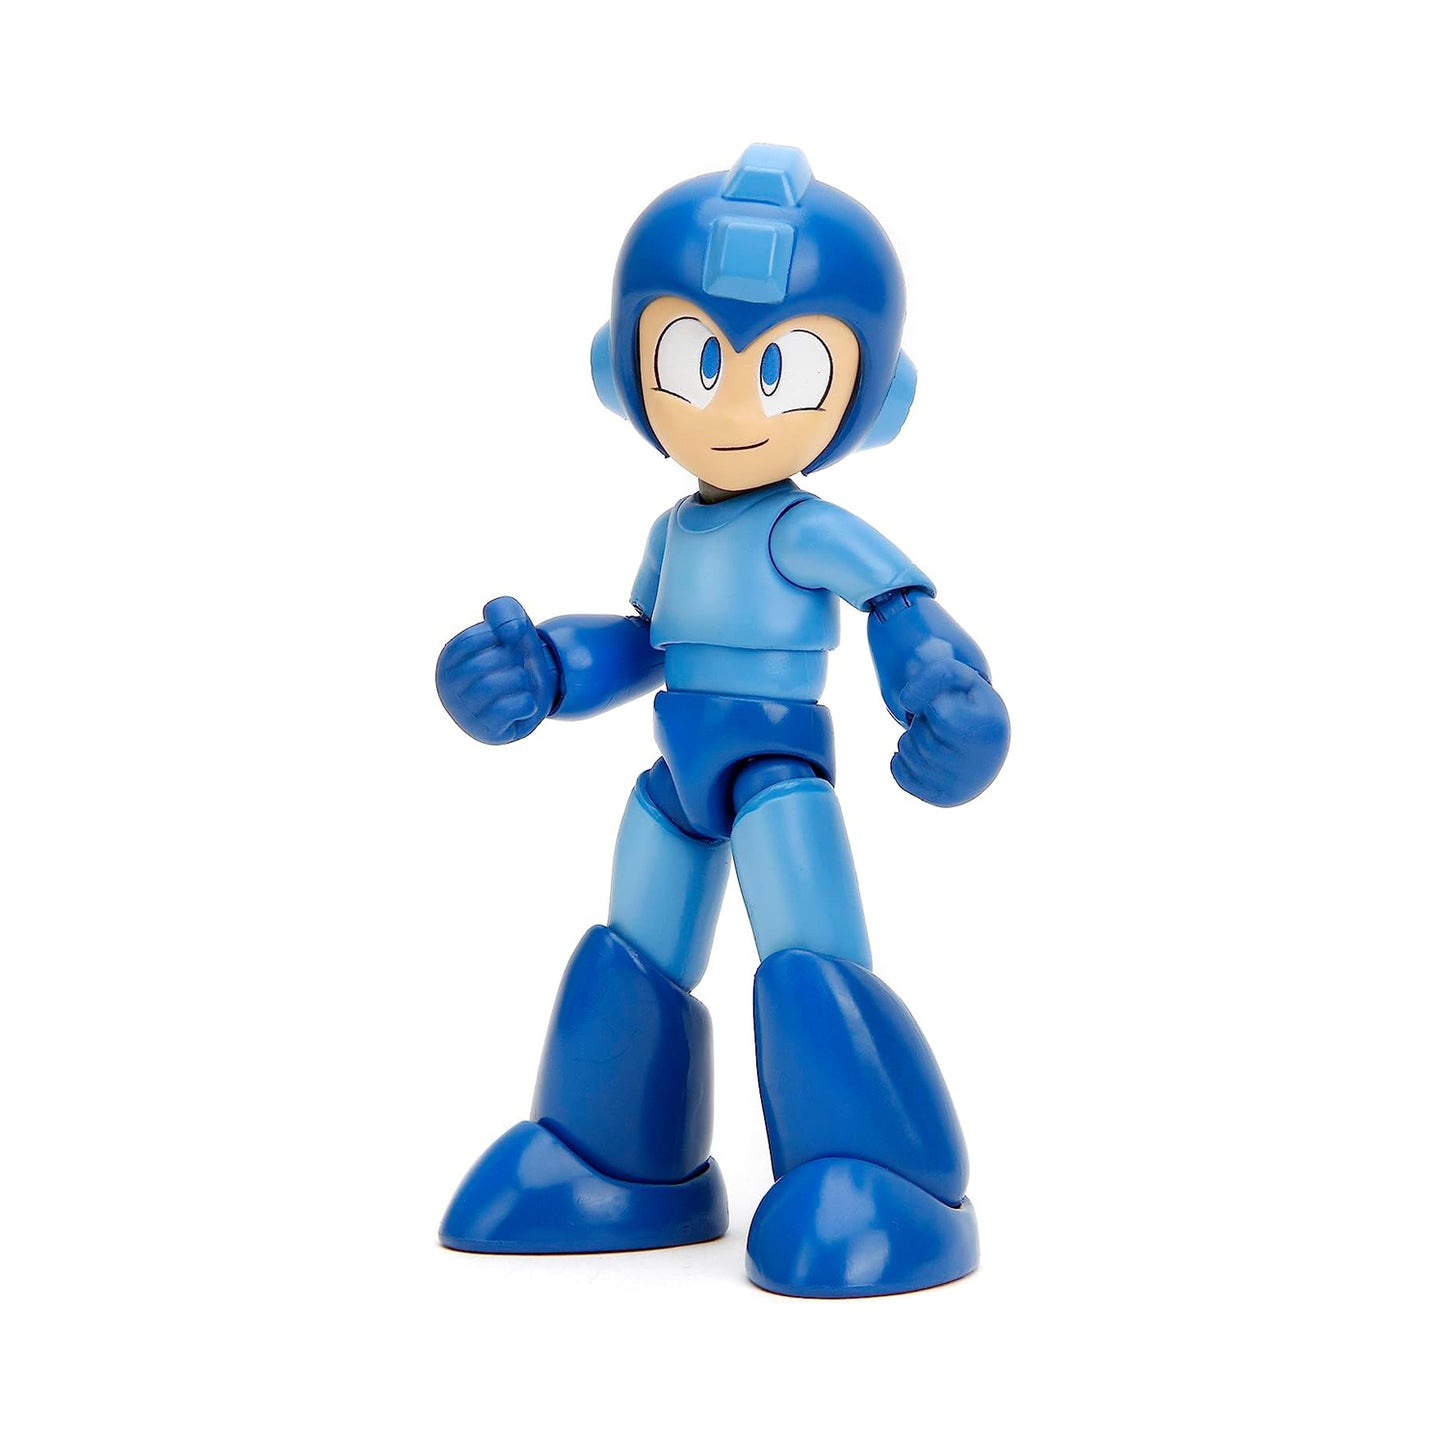 Mega Man 1:12 Scale Action Figure from Mega Man